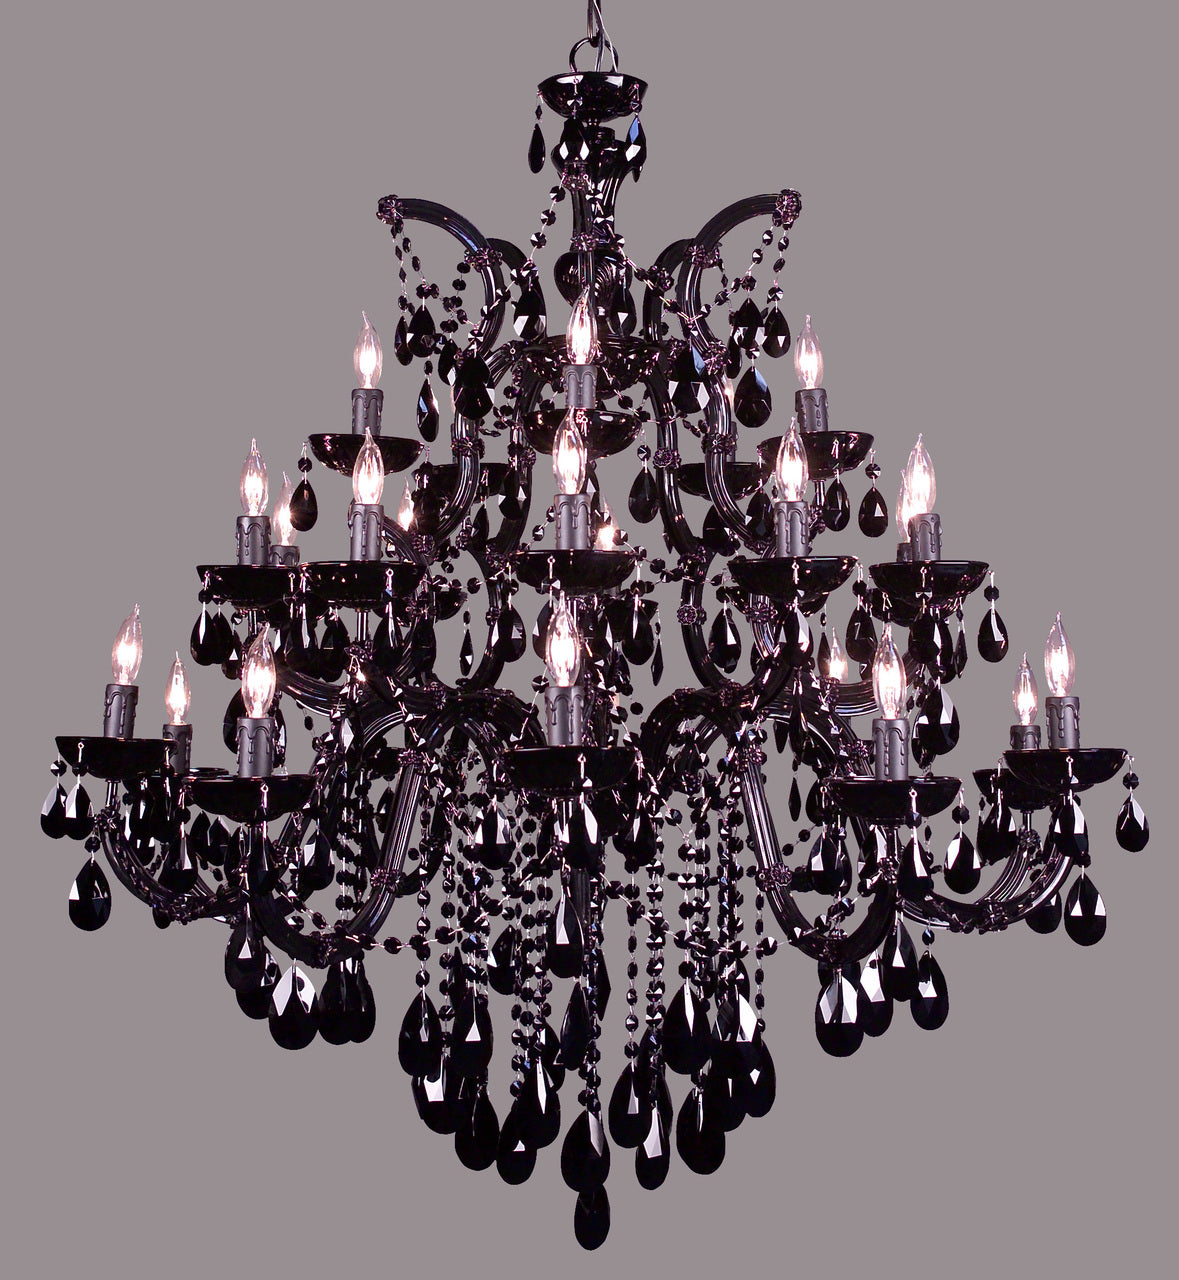 Classic Lighting 8349 BBLK CBK Rialto Traditional Crystal Chandelier in Black